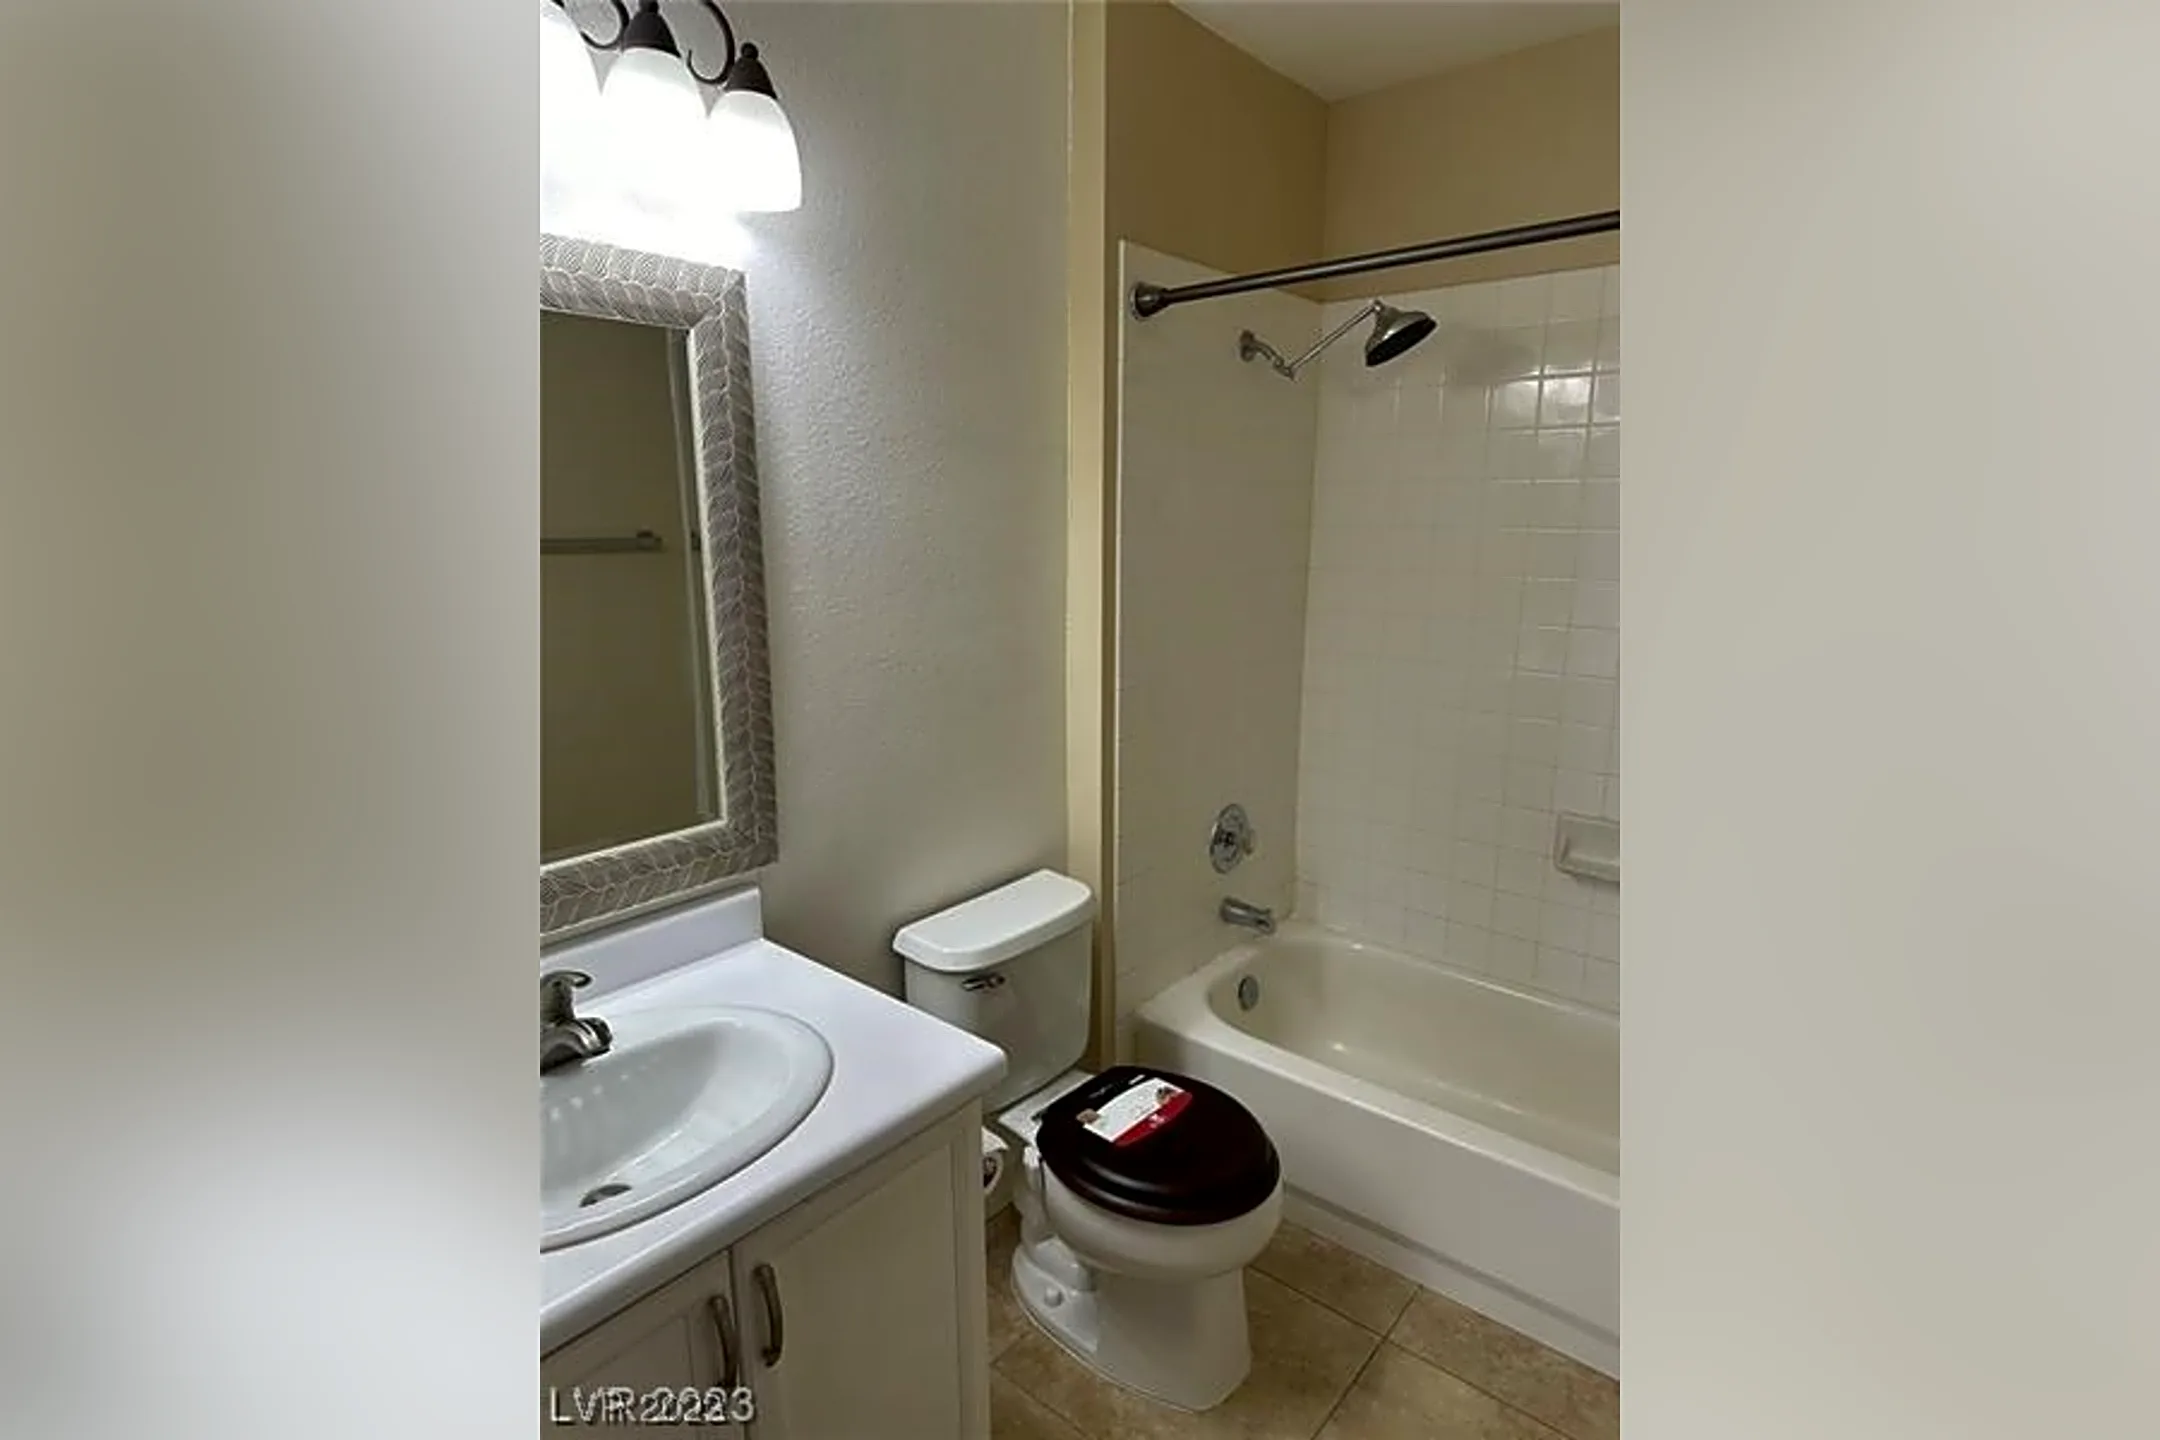 Bathroom - 8017 Lisa Dawn Ave - Las Vegas, NV